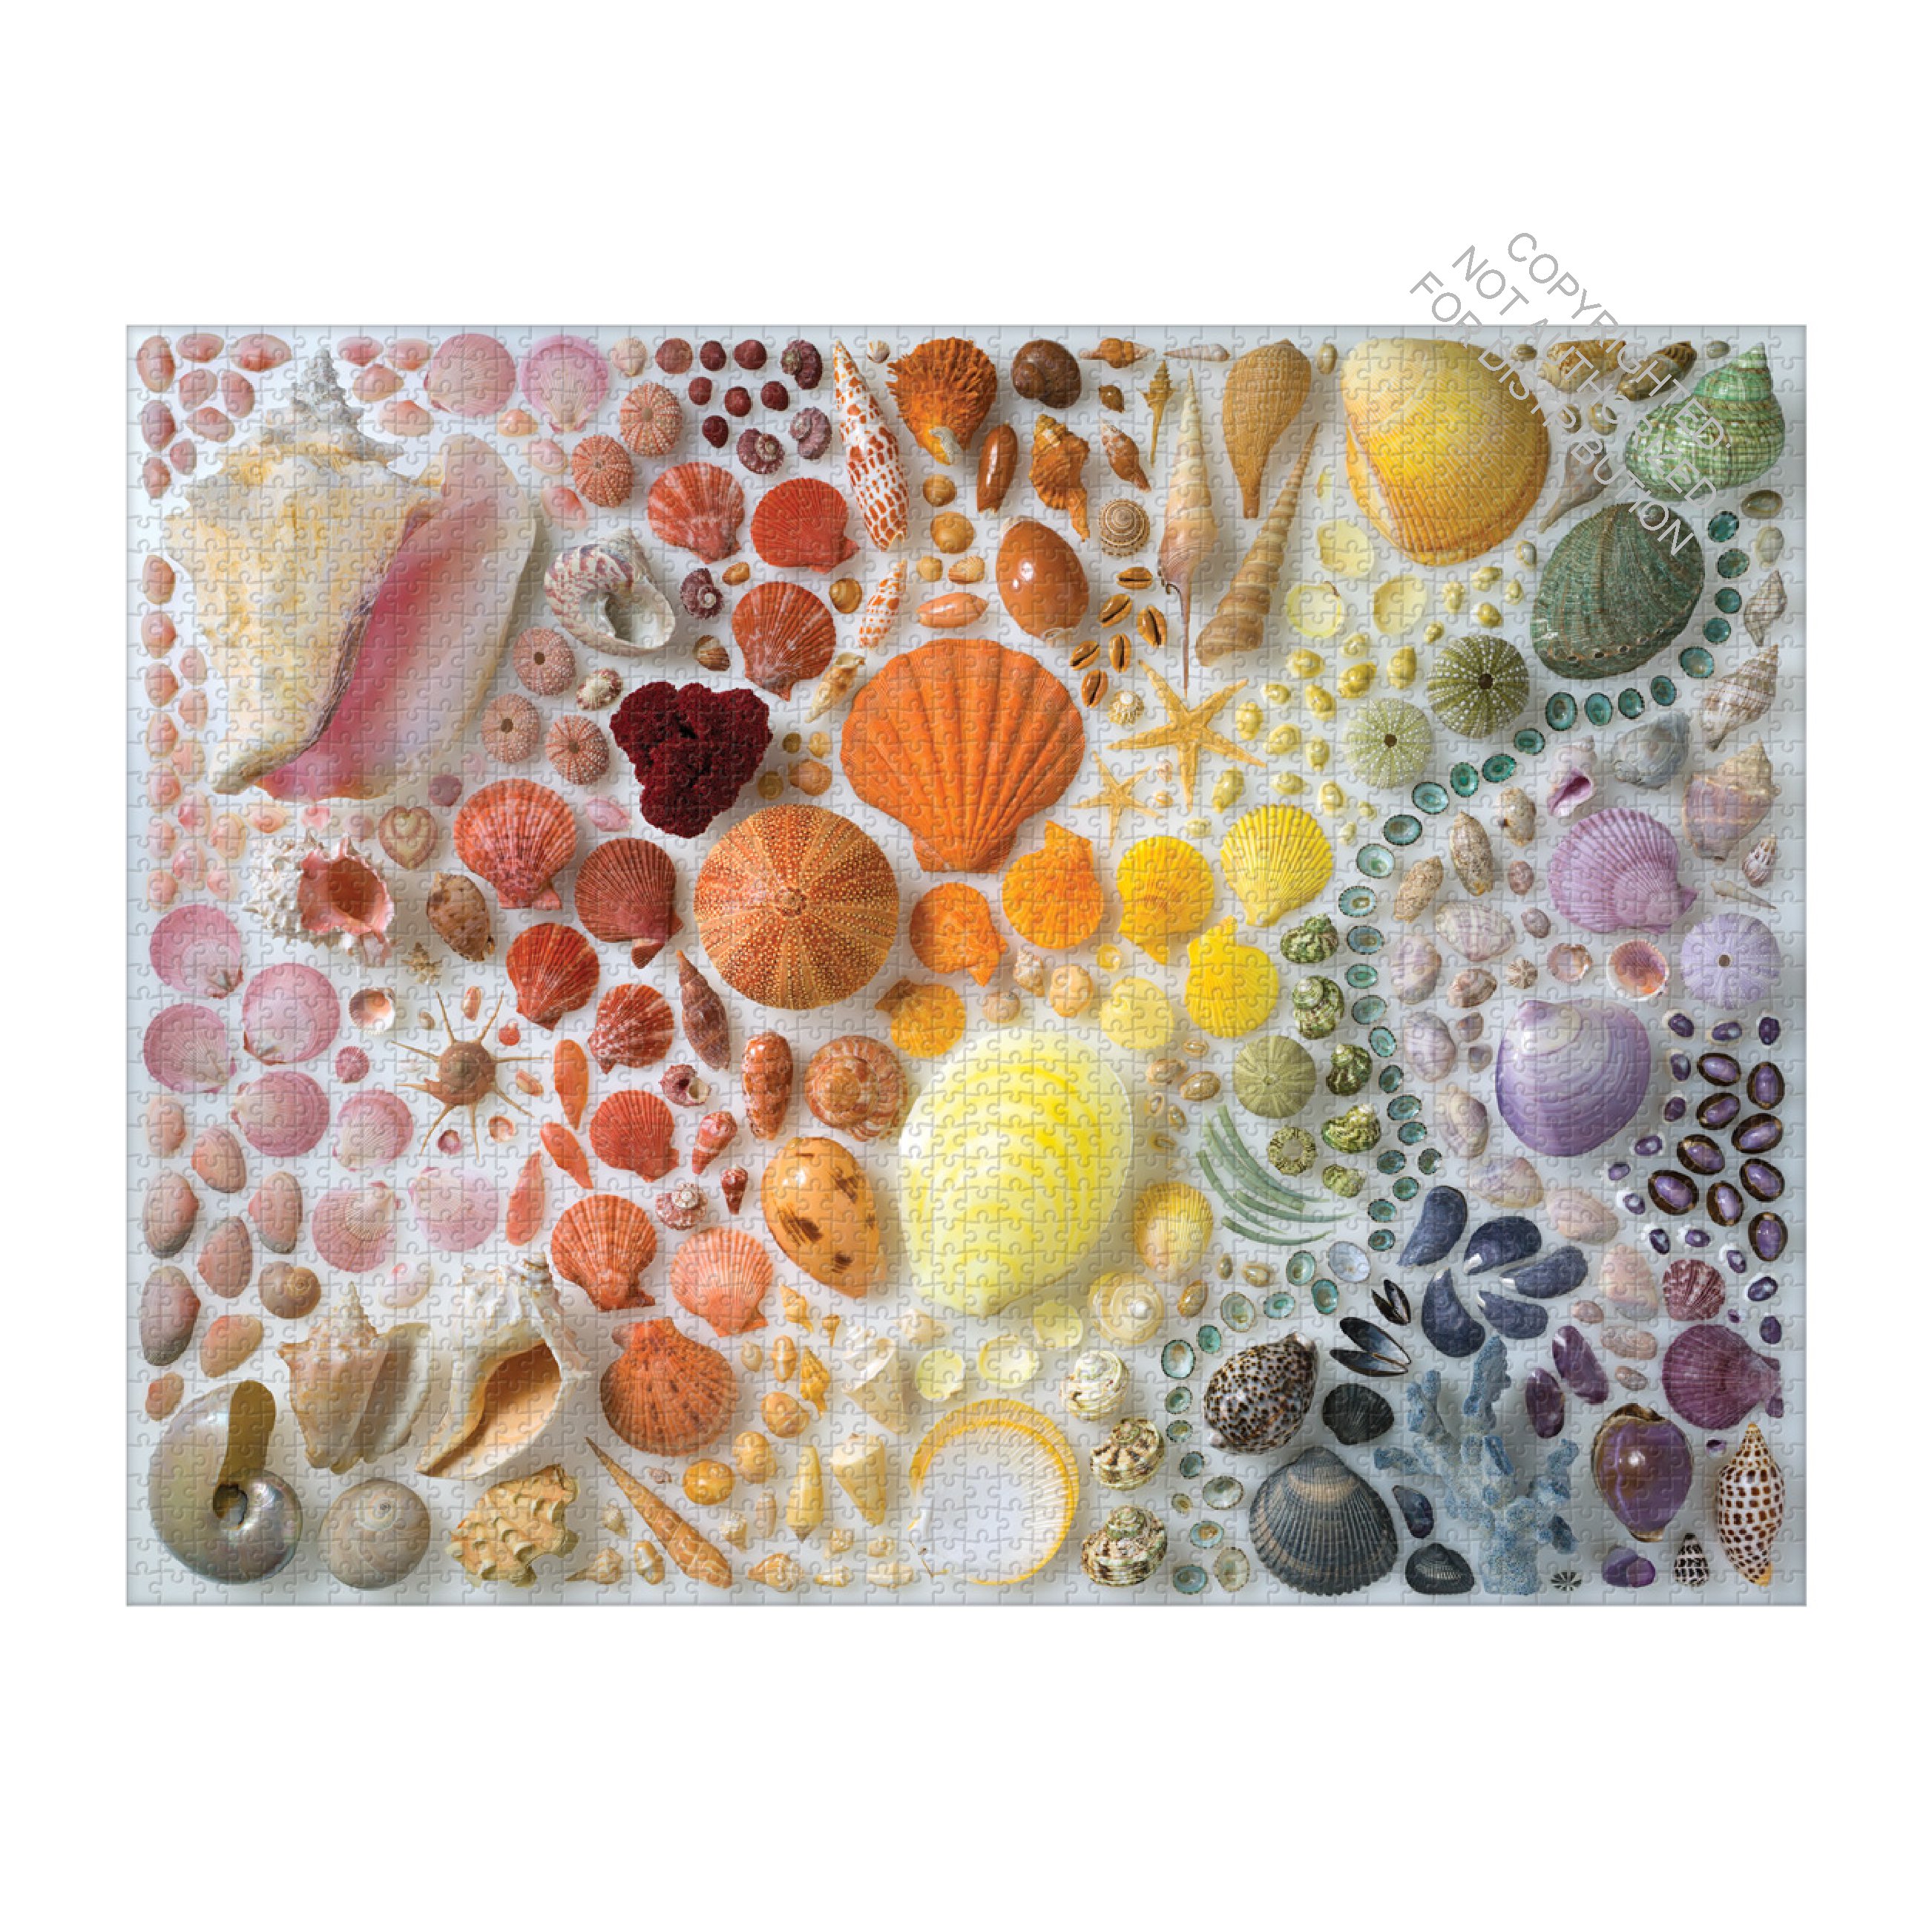 Rainbow Seashells 2000 Piece Puzzle